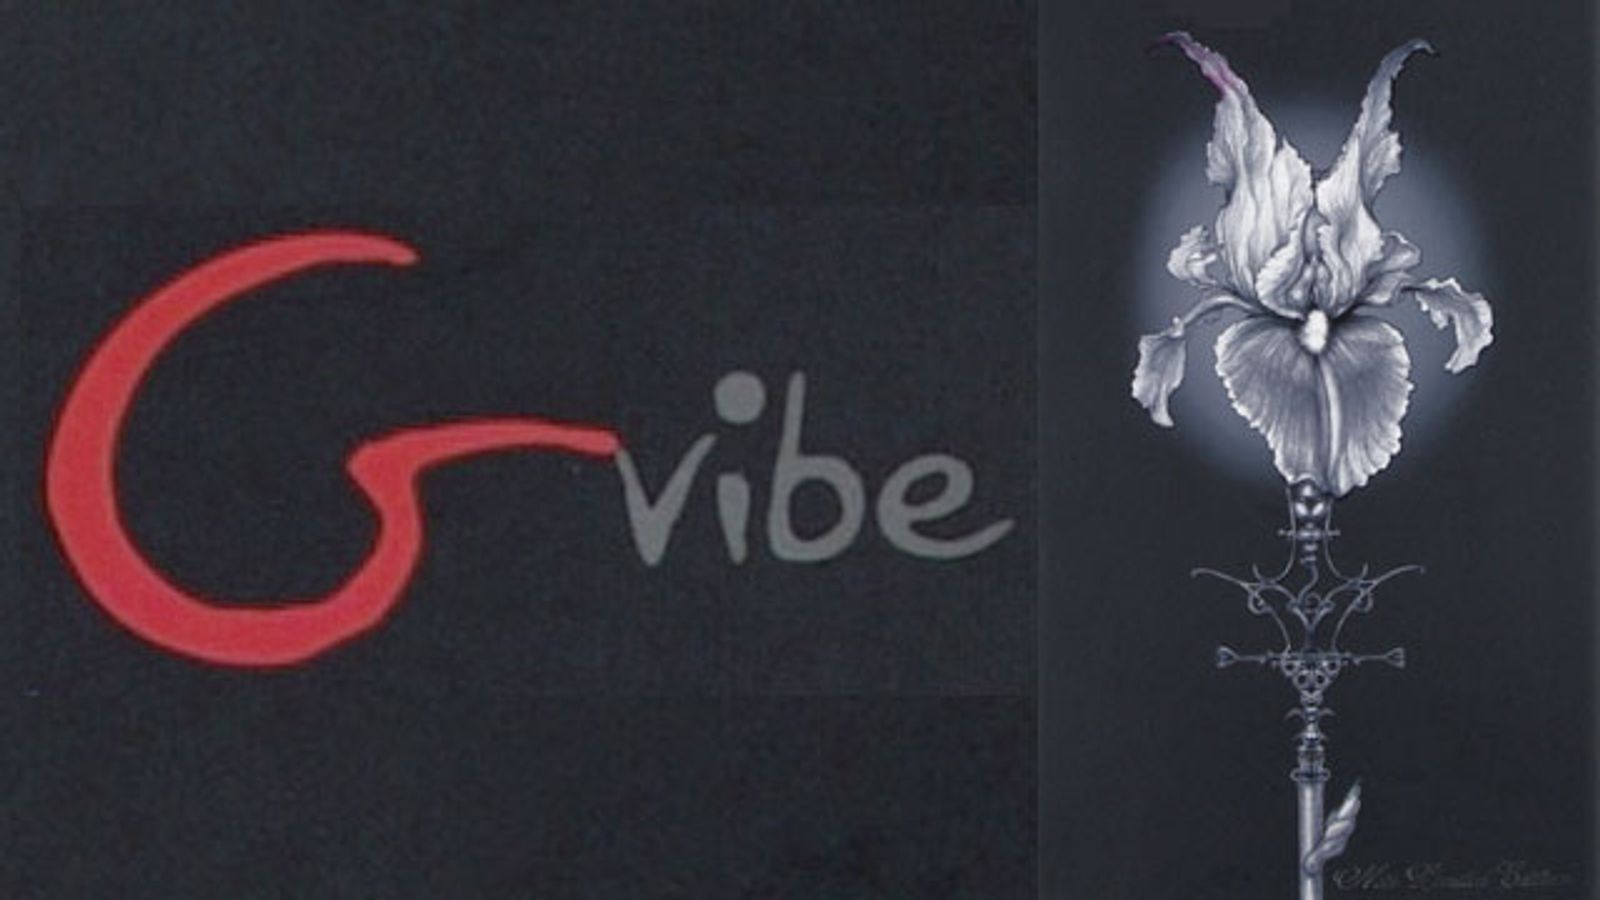 Fun Toys Introduces G-Vibe Noir Limited Edition